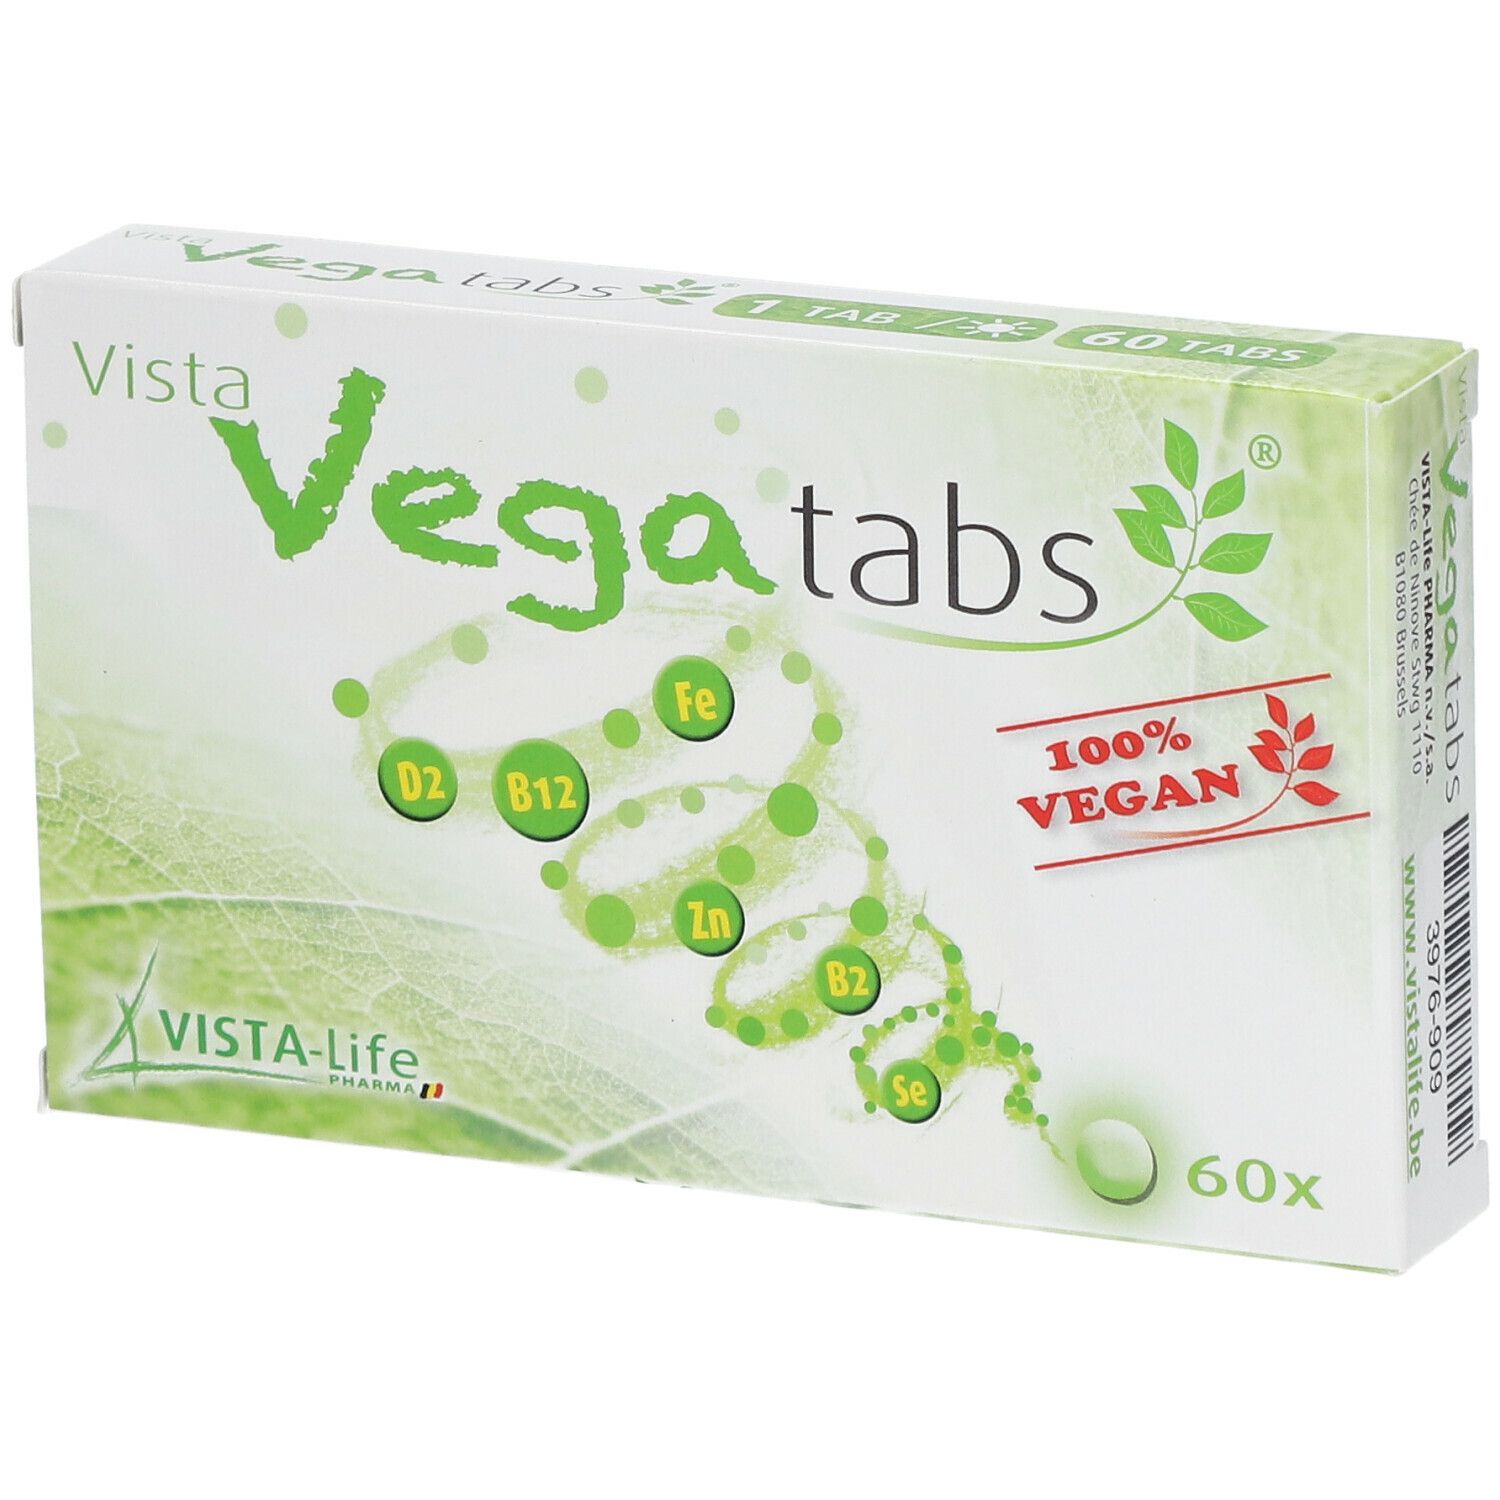 Vista Vegatabs®